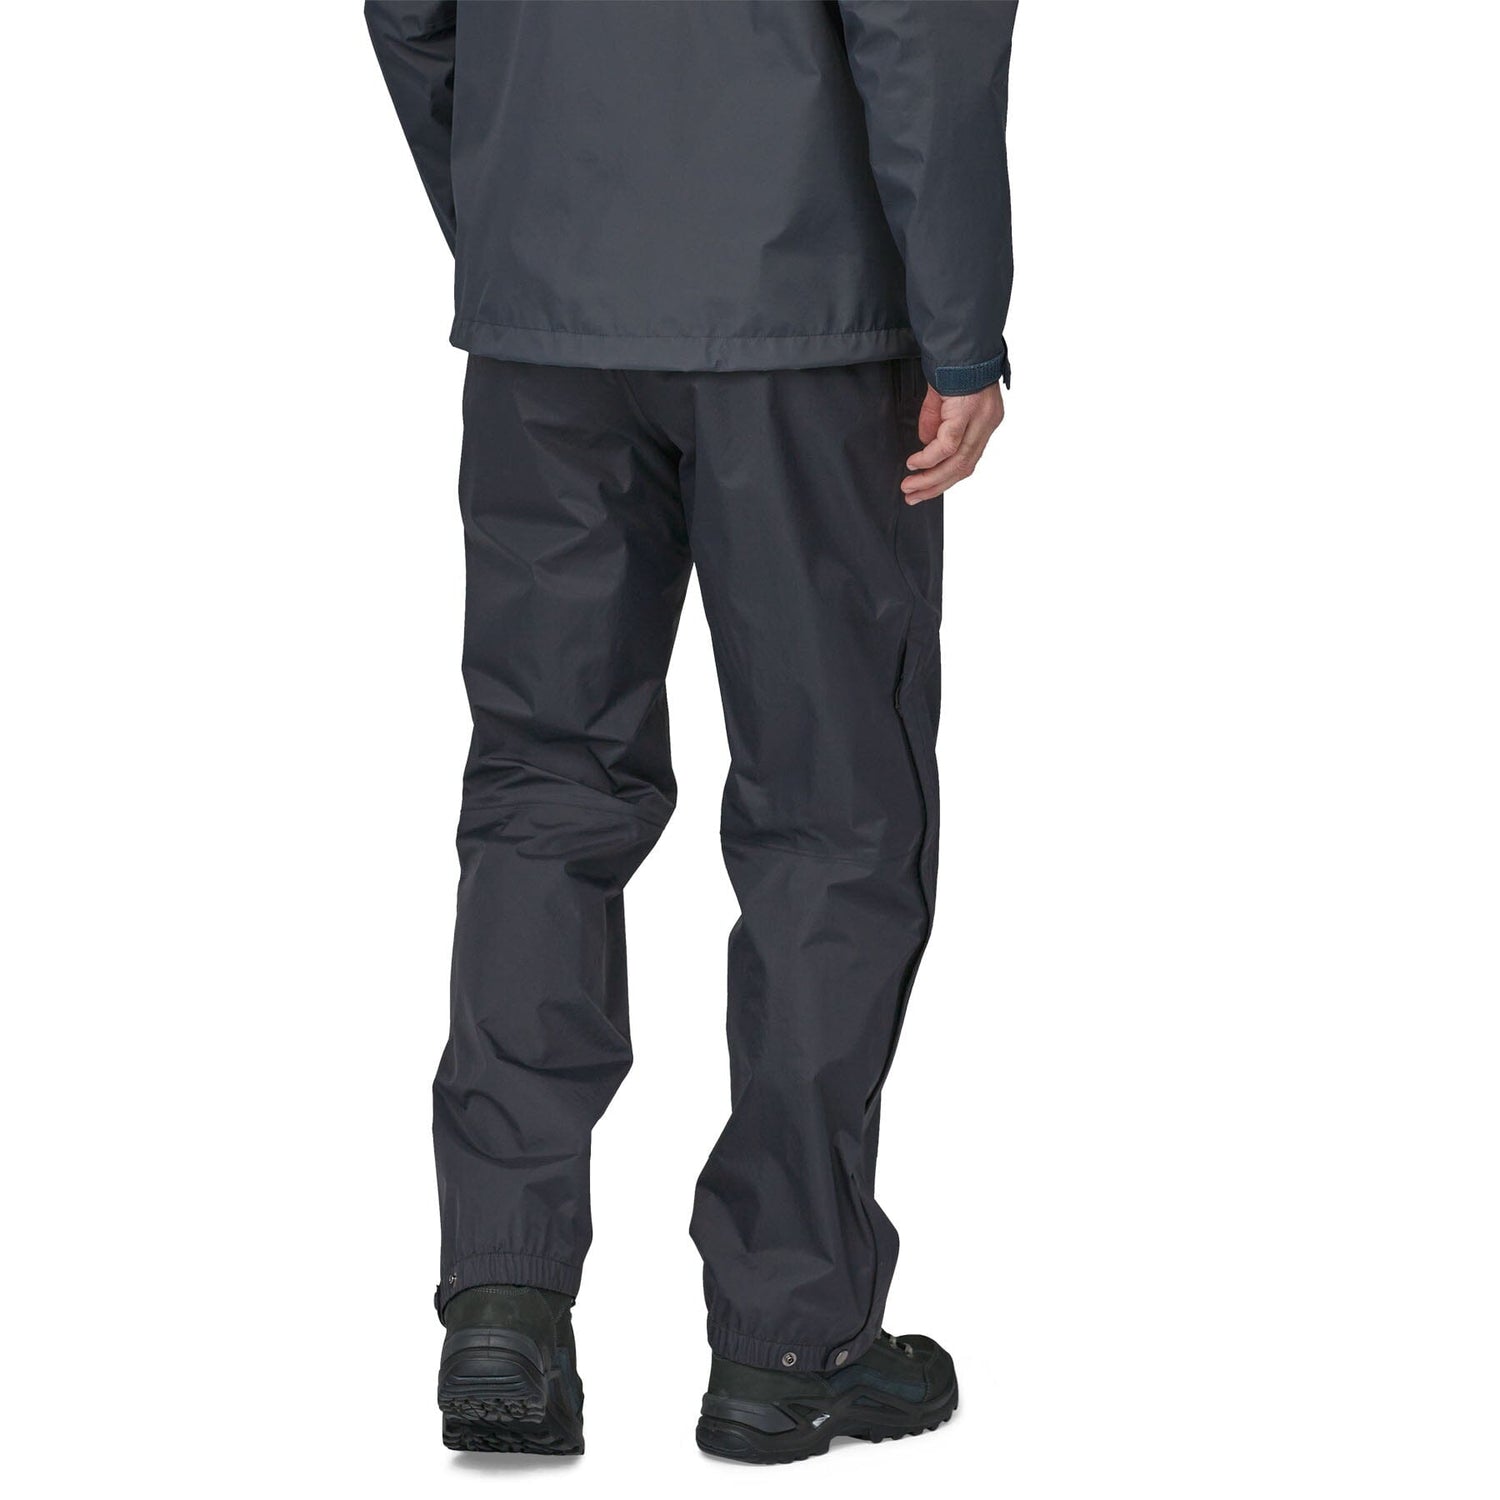 Patagonia - M's Torrentshell 3L Rain Pants - Recycled Nylon - Weekendbee - sustainable sportswear